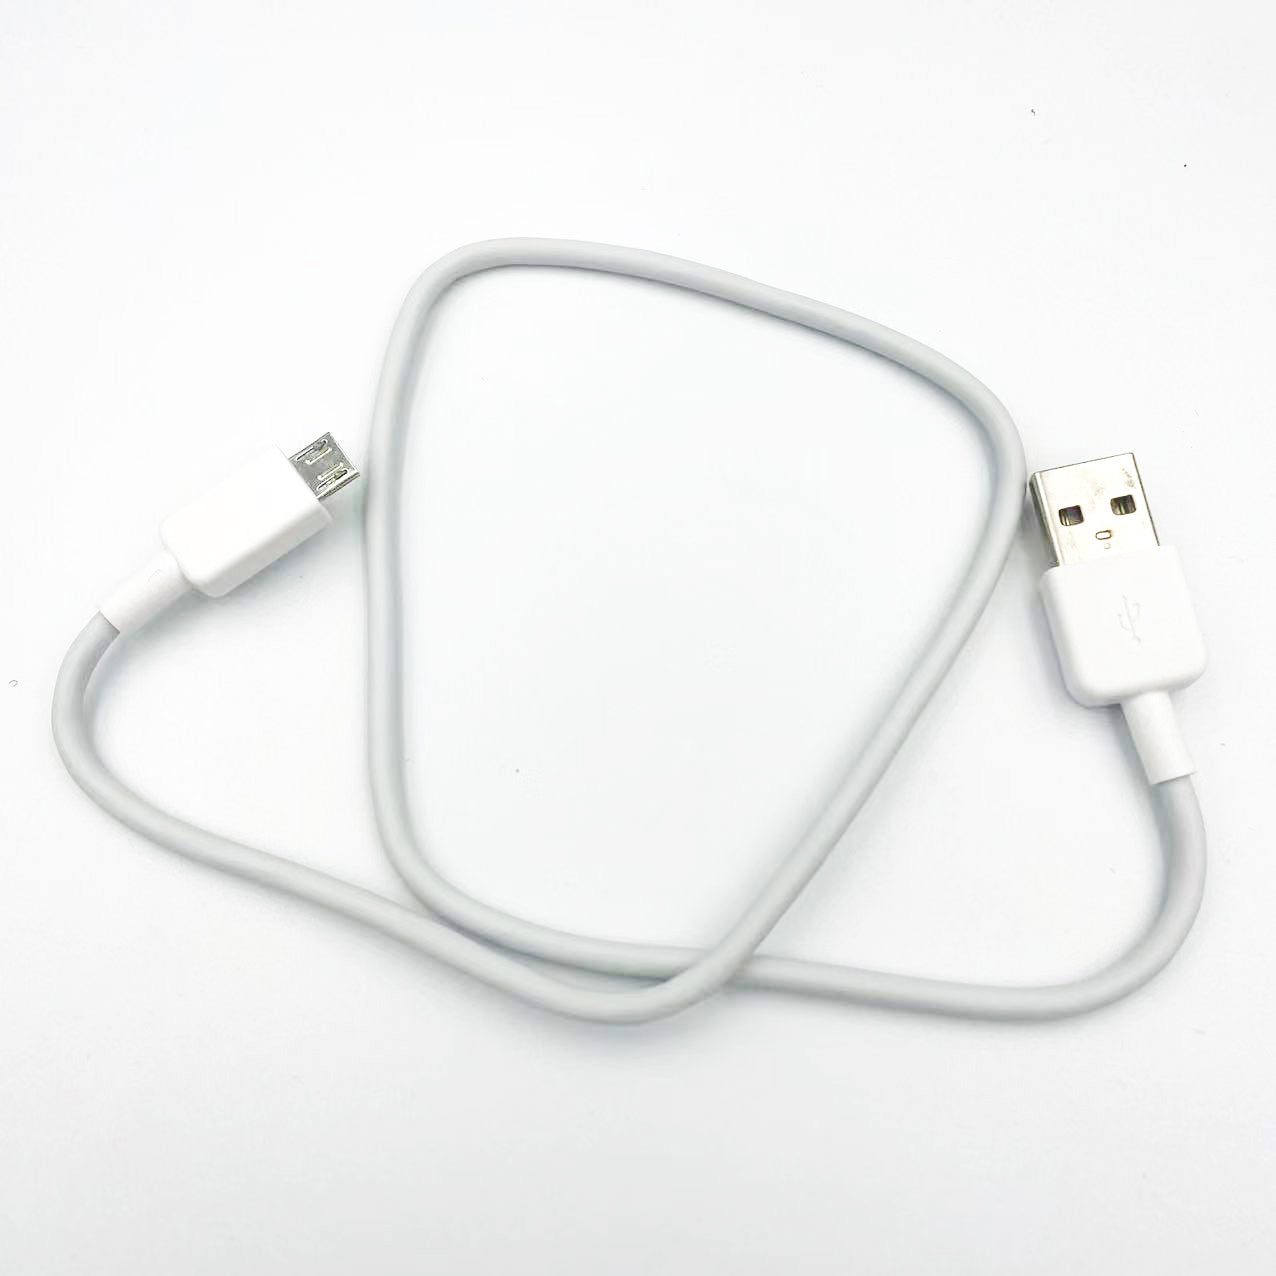 Micro USB Cable - 50cm